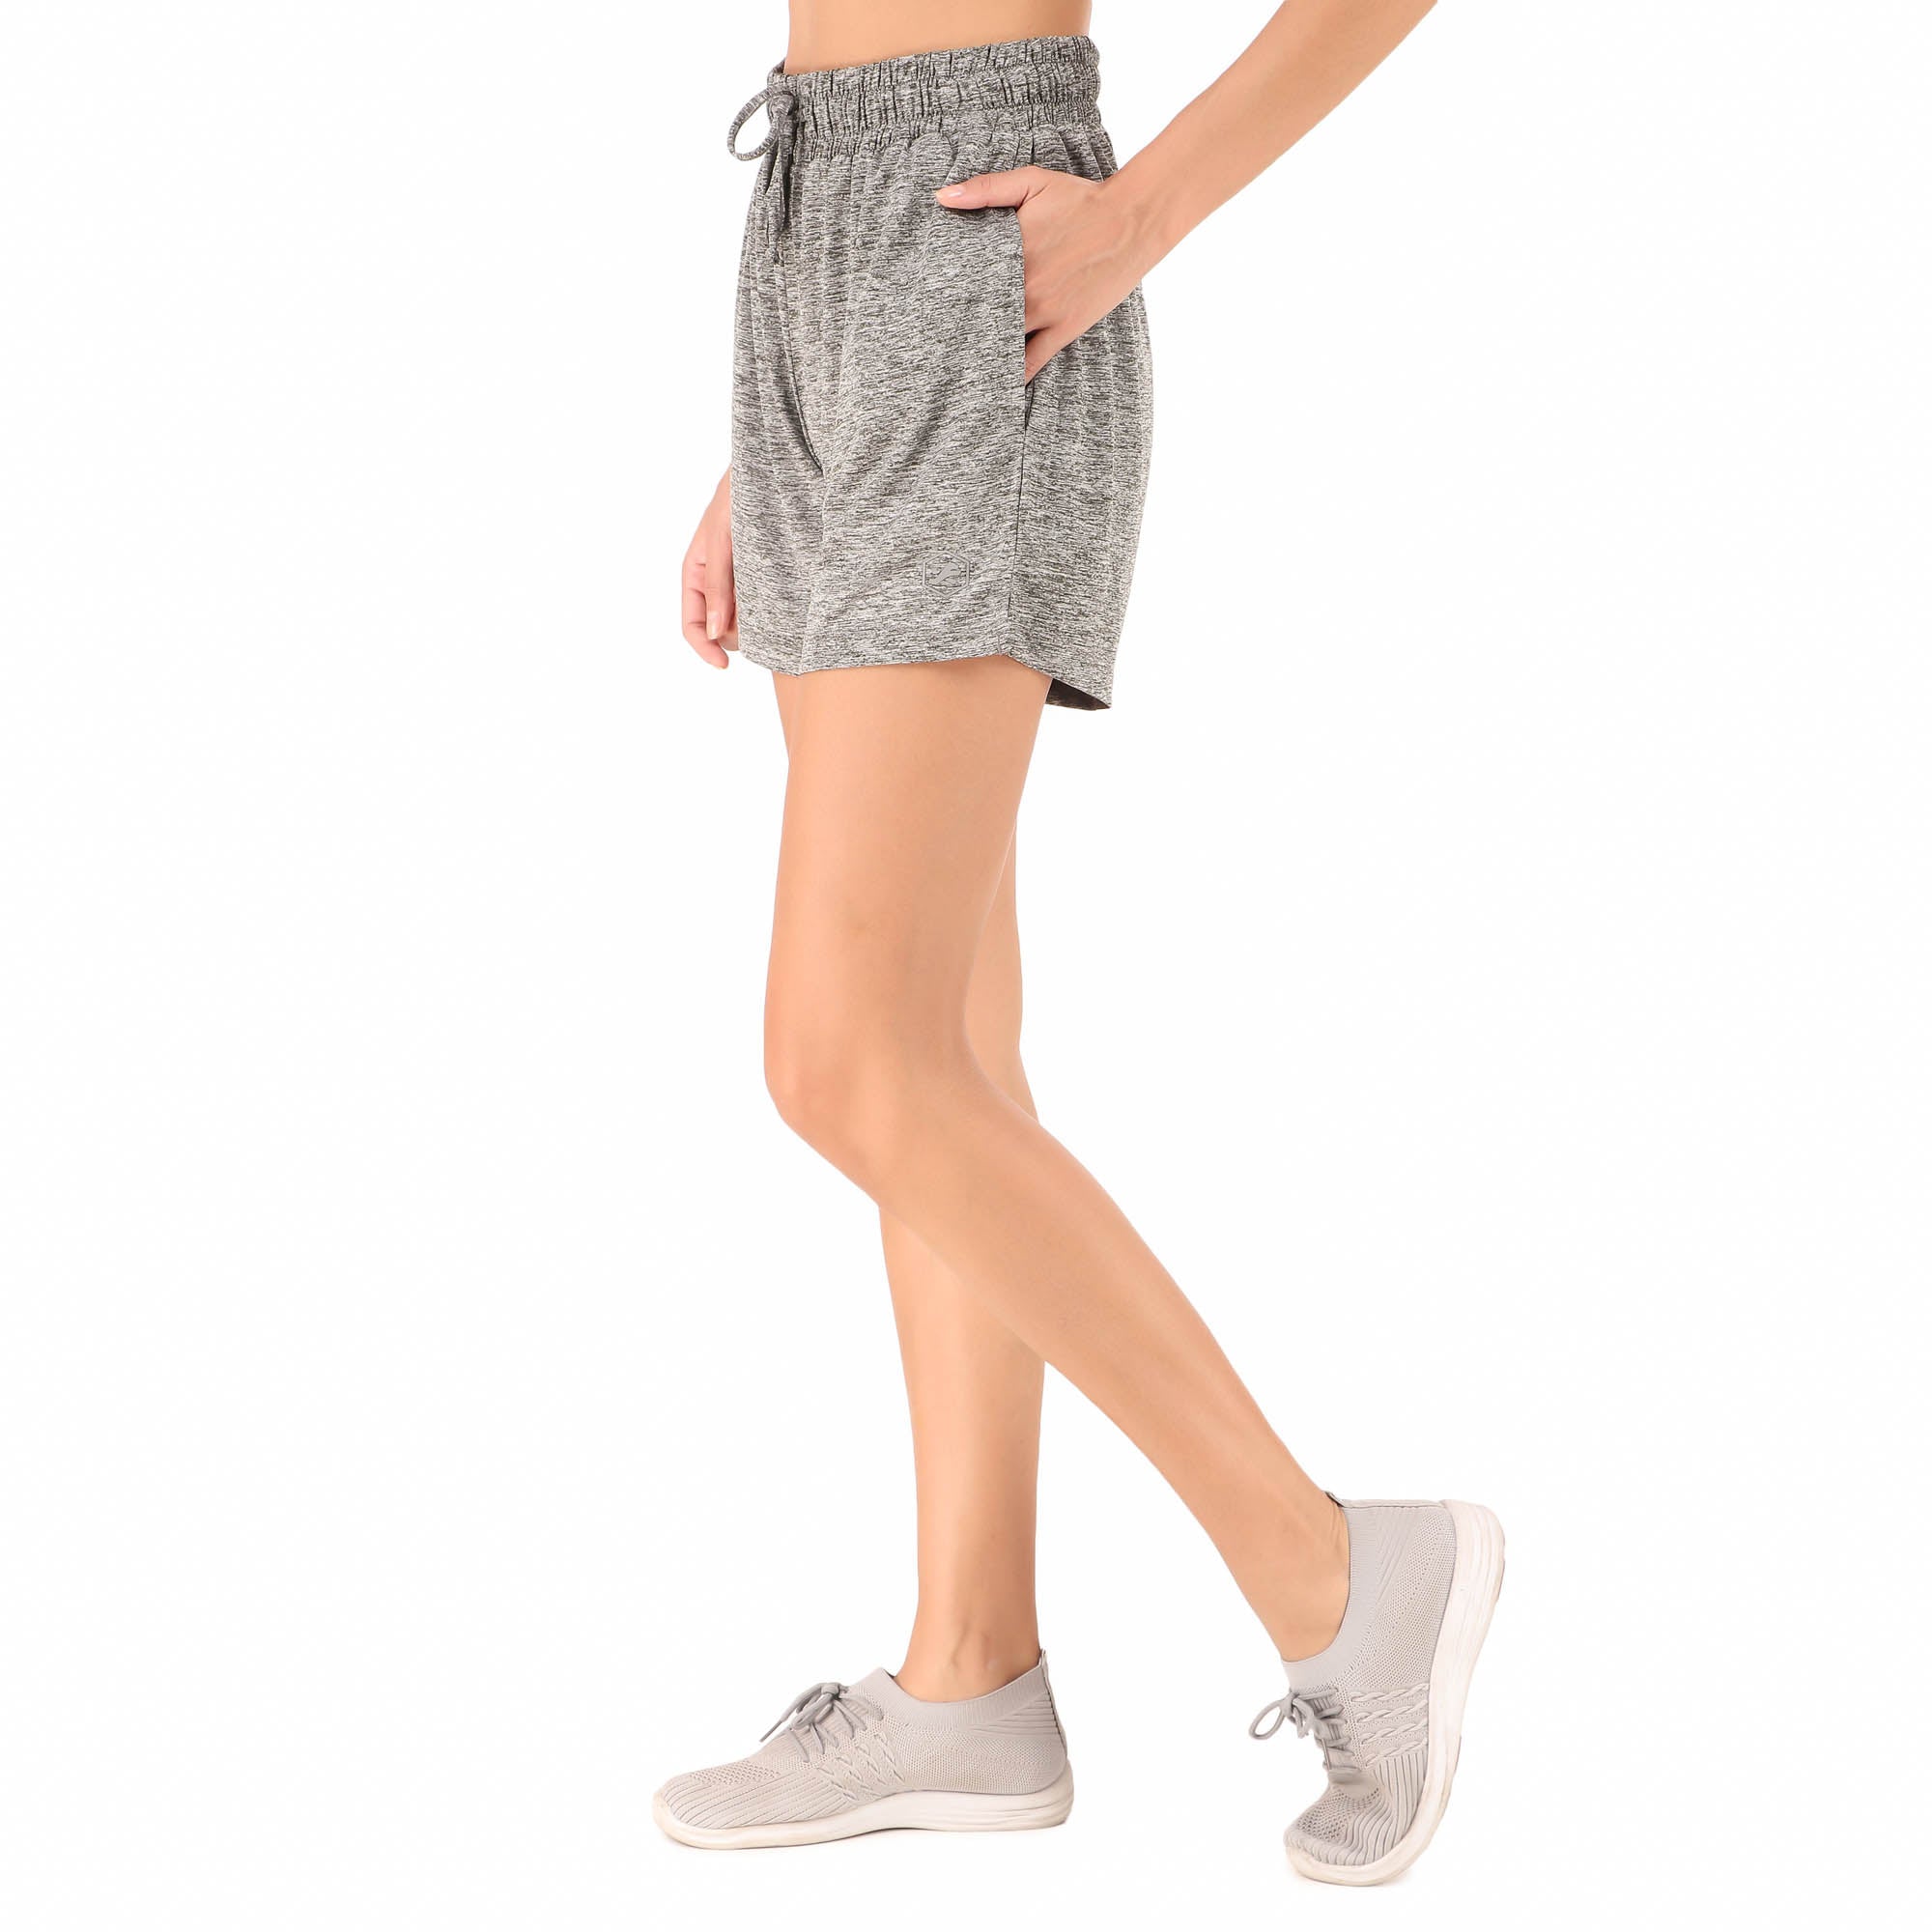 Activewear Shorts For Women (Iron Melange)